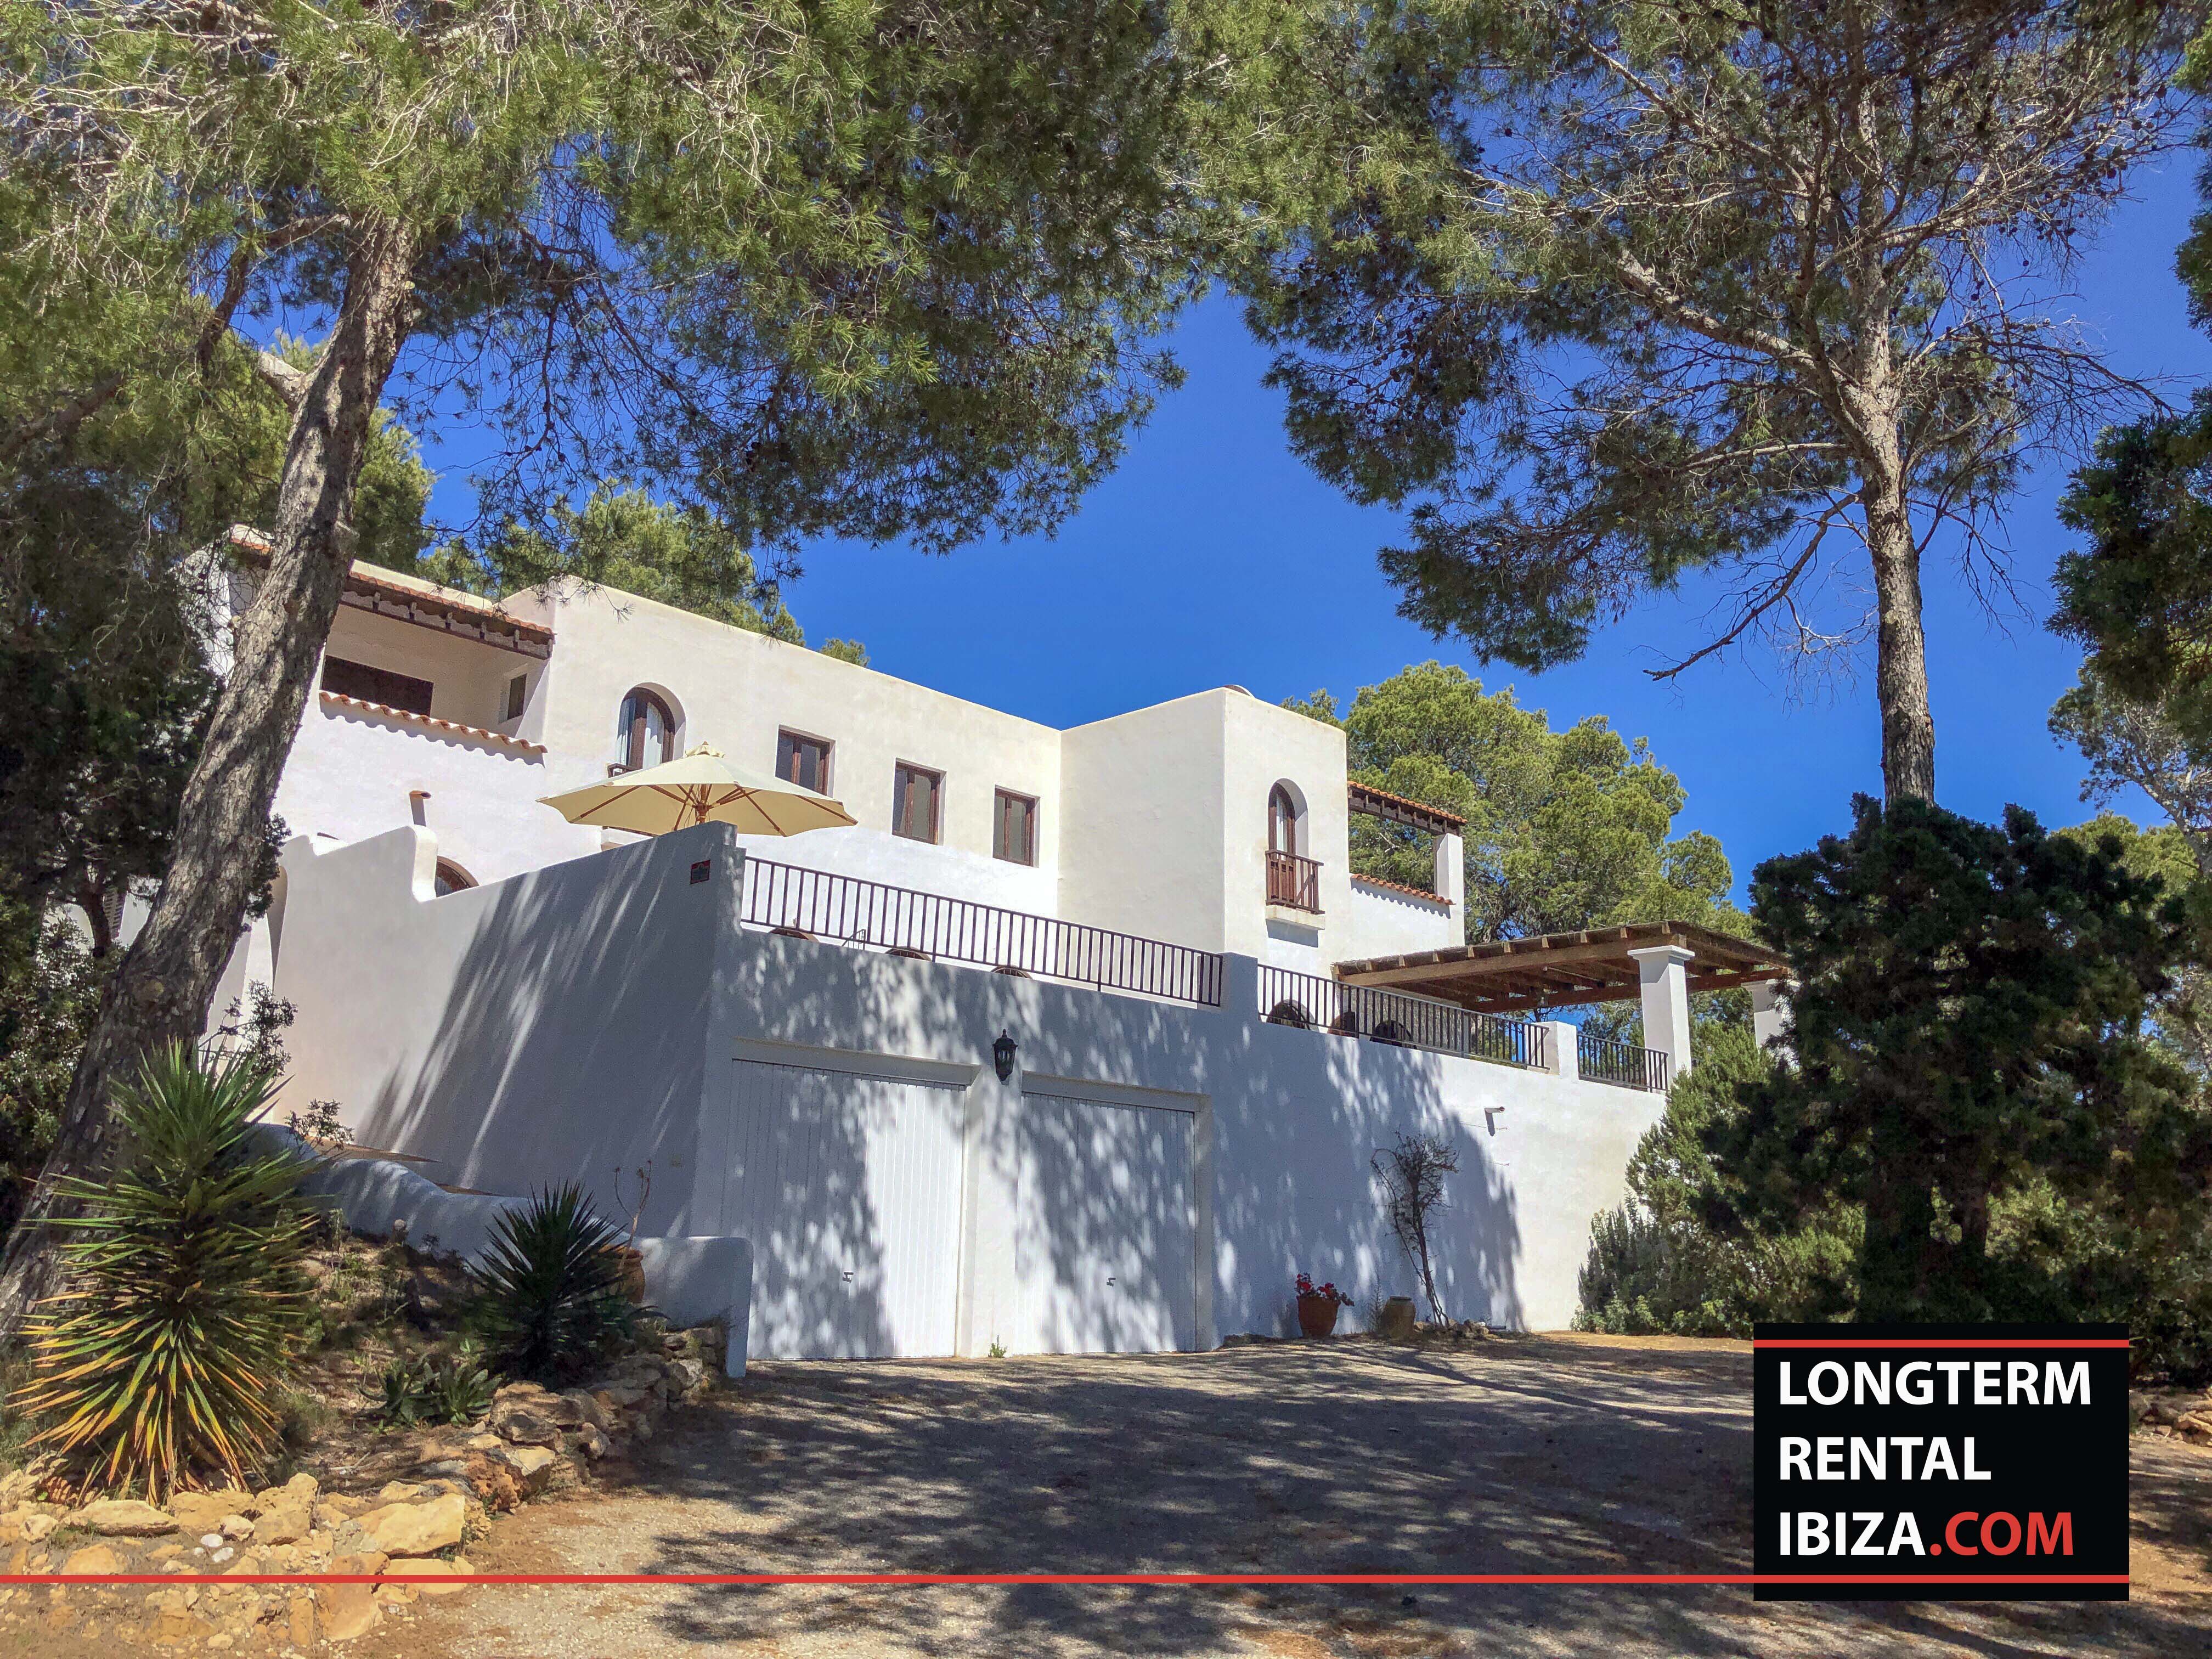 Long term rental Ibiza - Villa Tarida, annual rental ibiza.